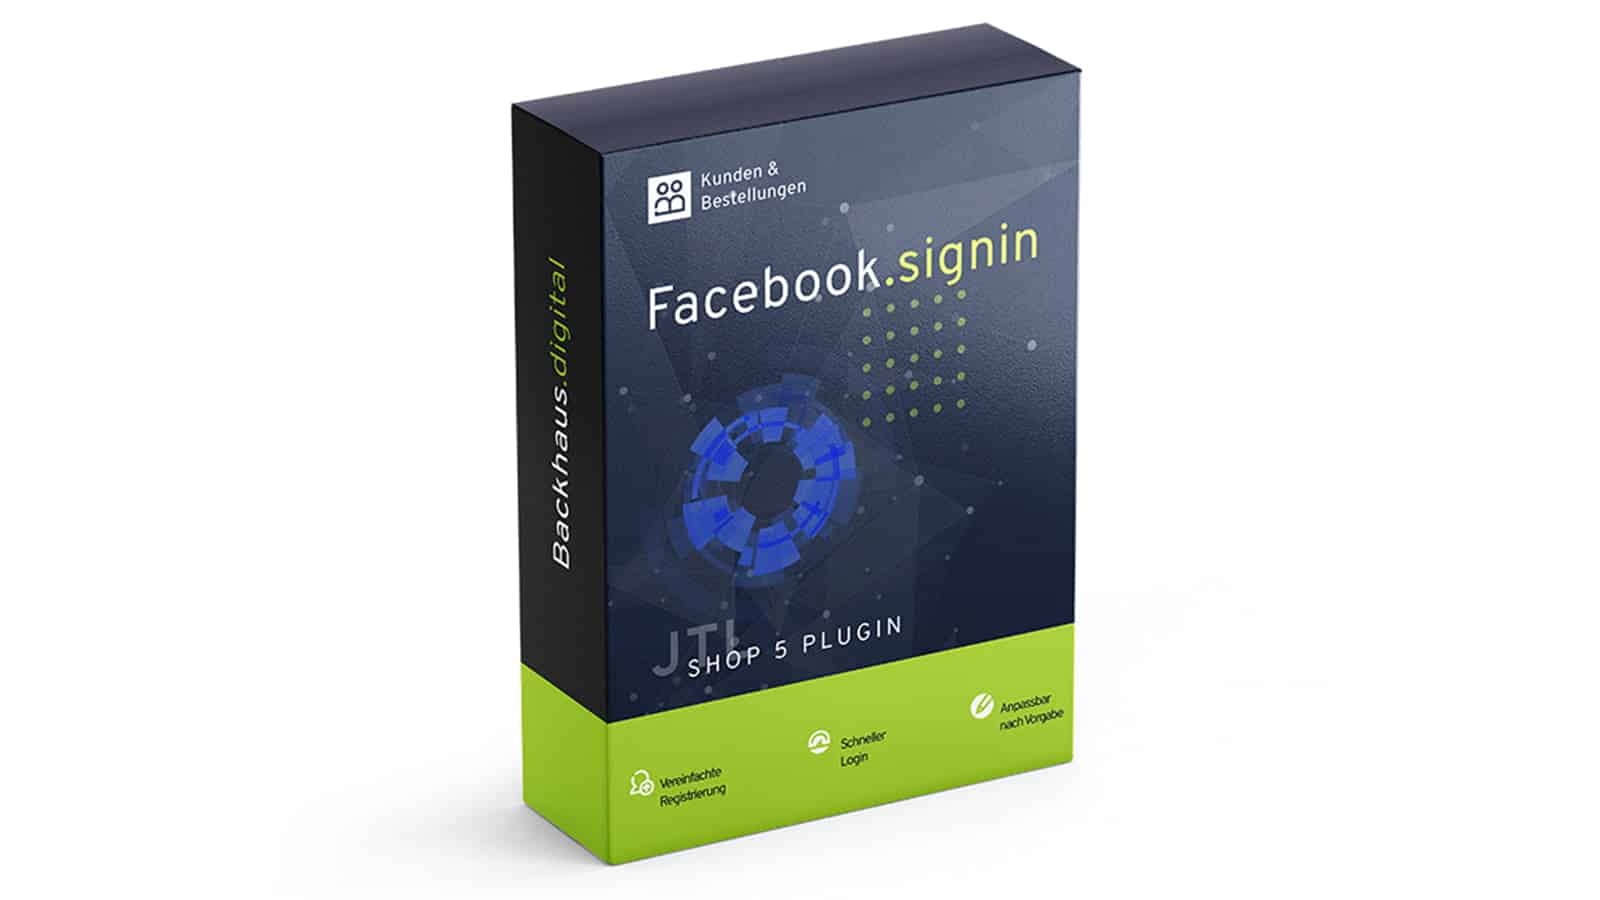 jtl-plugin-facebook-signin-cover-min